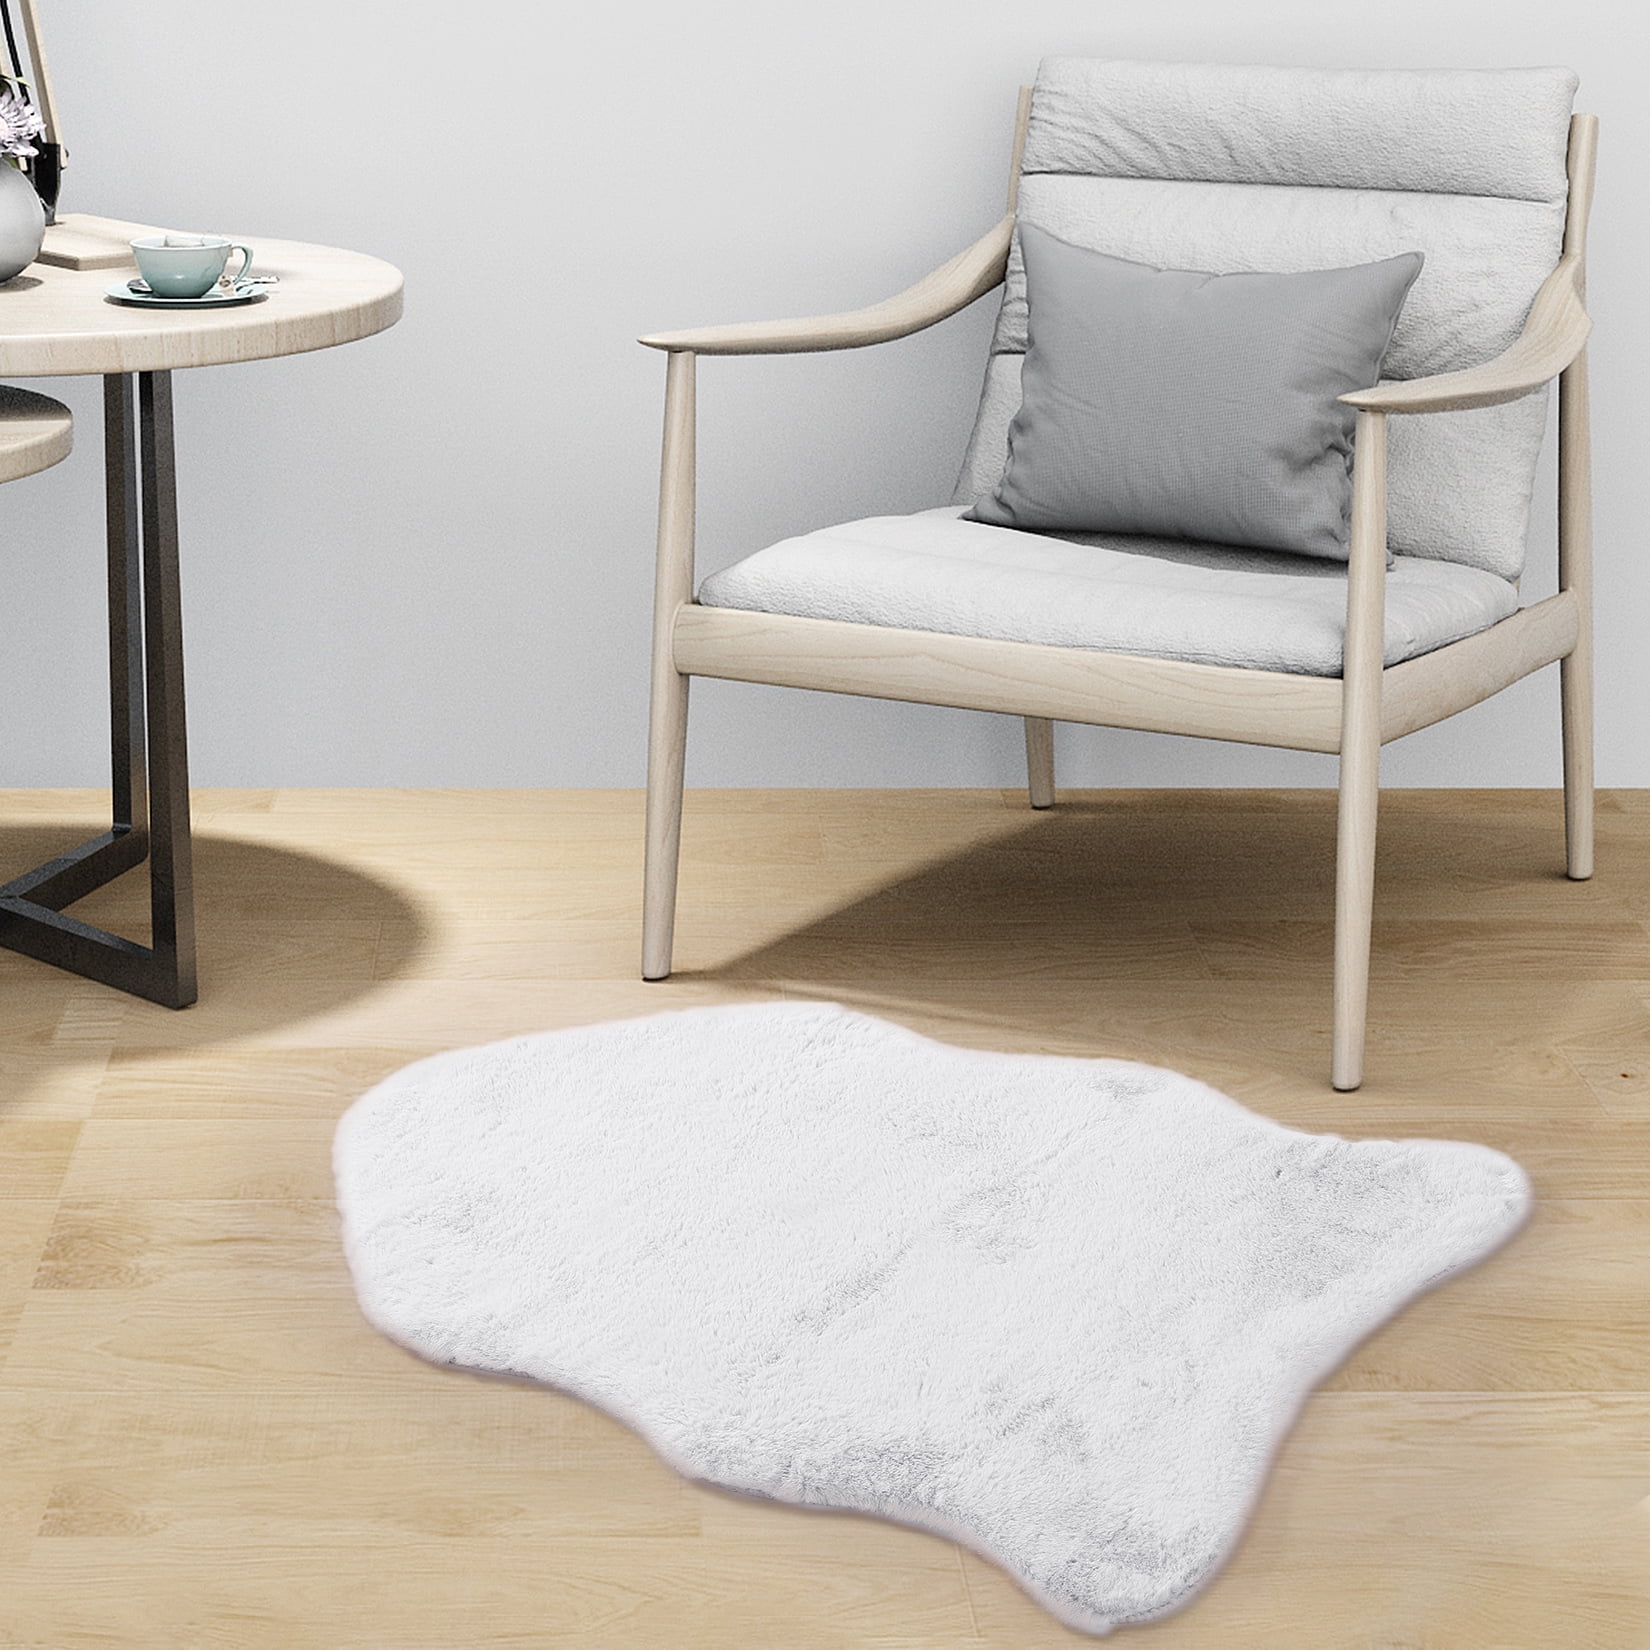 Bekay Faux Sheepskin Fur Area Rug Rabbit Chair Er Seat Pad Fuzzy Thick Carpet Mat For Bedroom Floor2 X 3 White Com